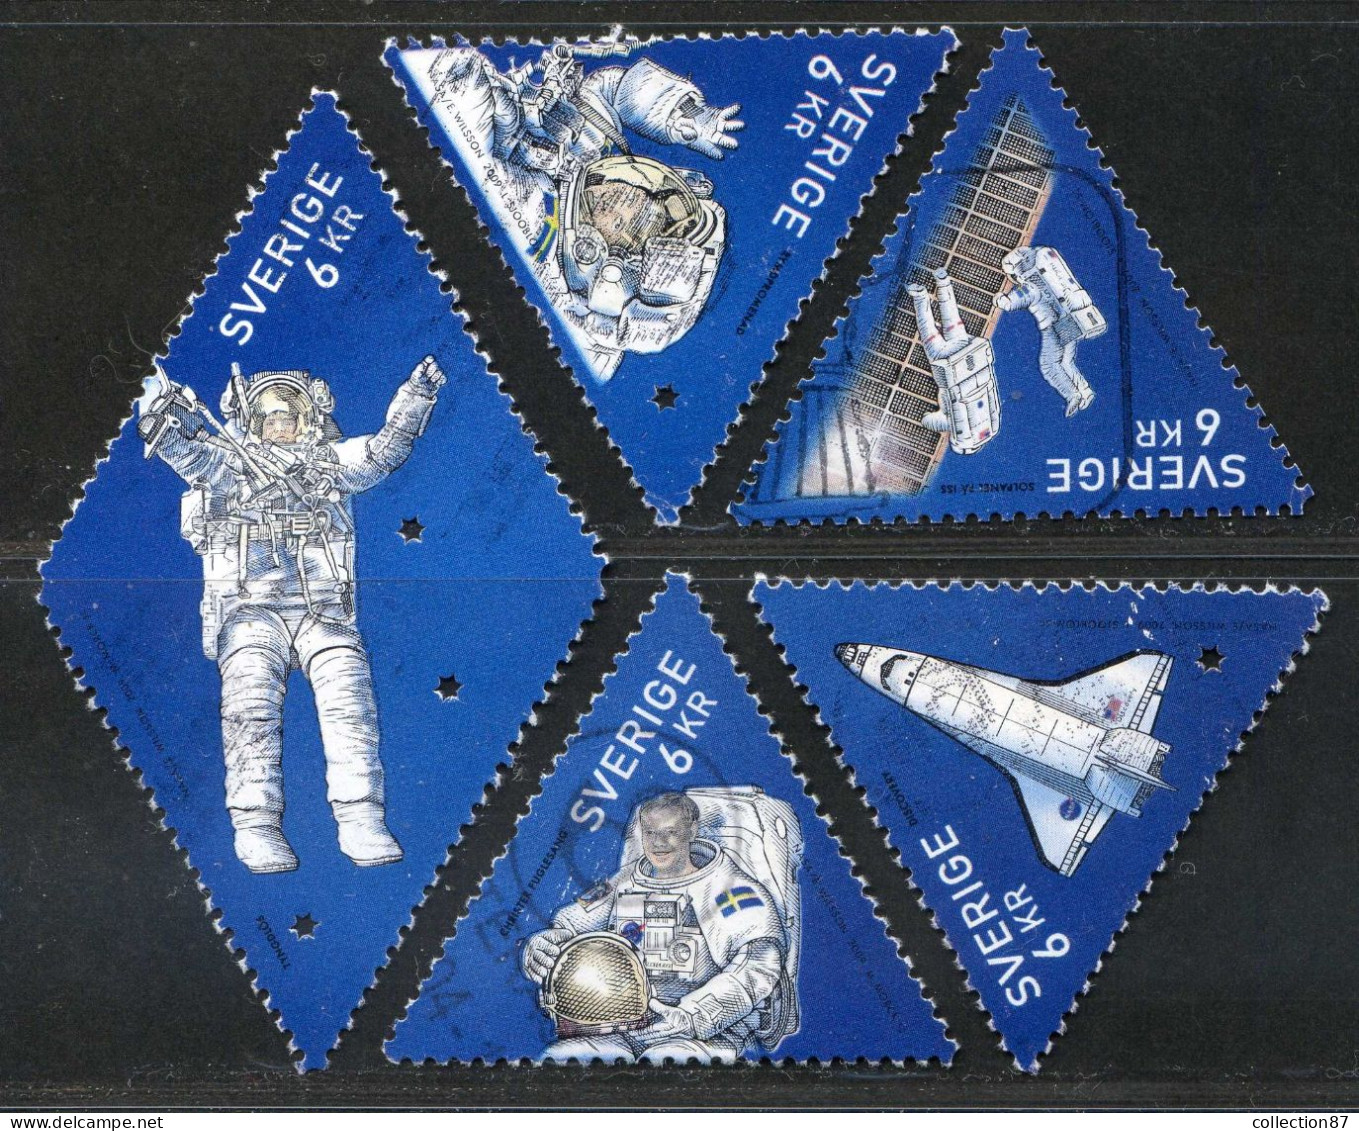 Réf 77 < SUEDE < Yvert N° 2696 à 2700 Ø < Année 2009 Used SWEDEN < Espace Christer Fuglesang Premier Astronaute Suédois - Usados